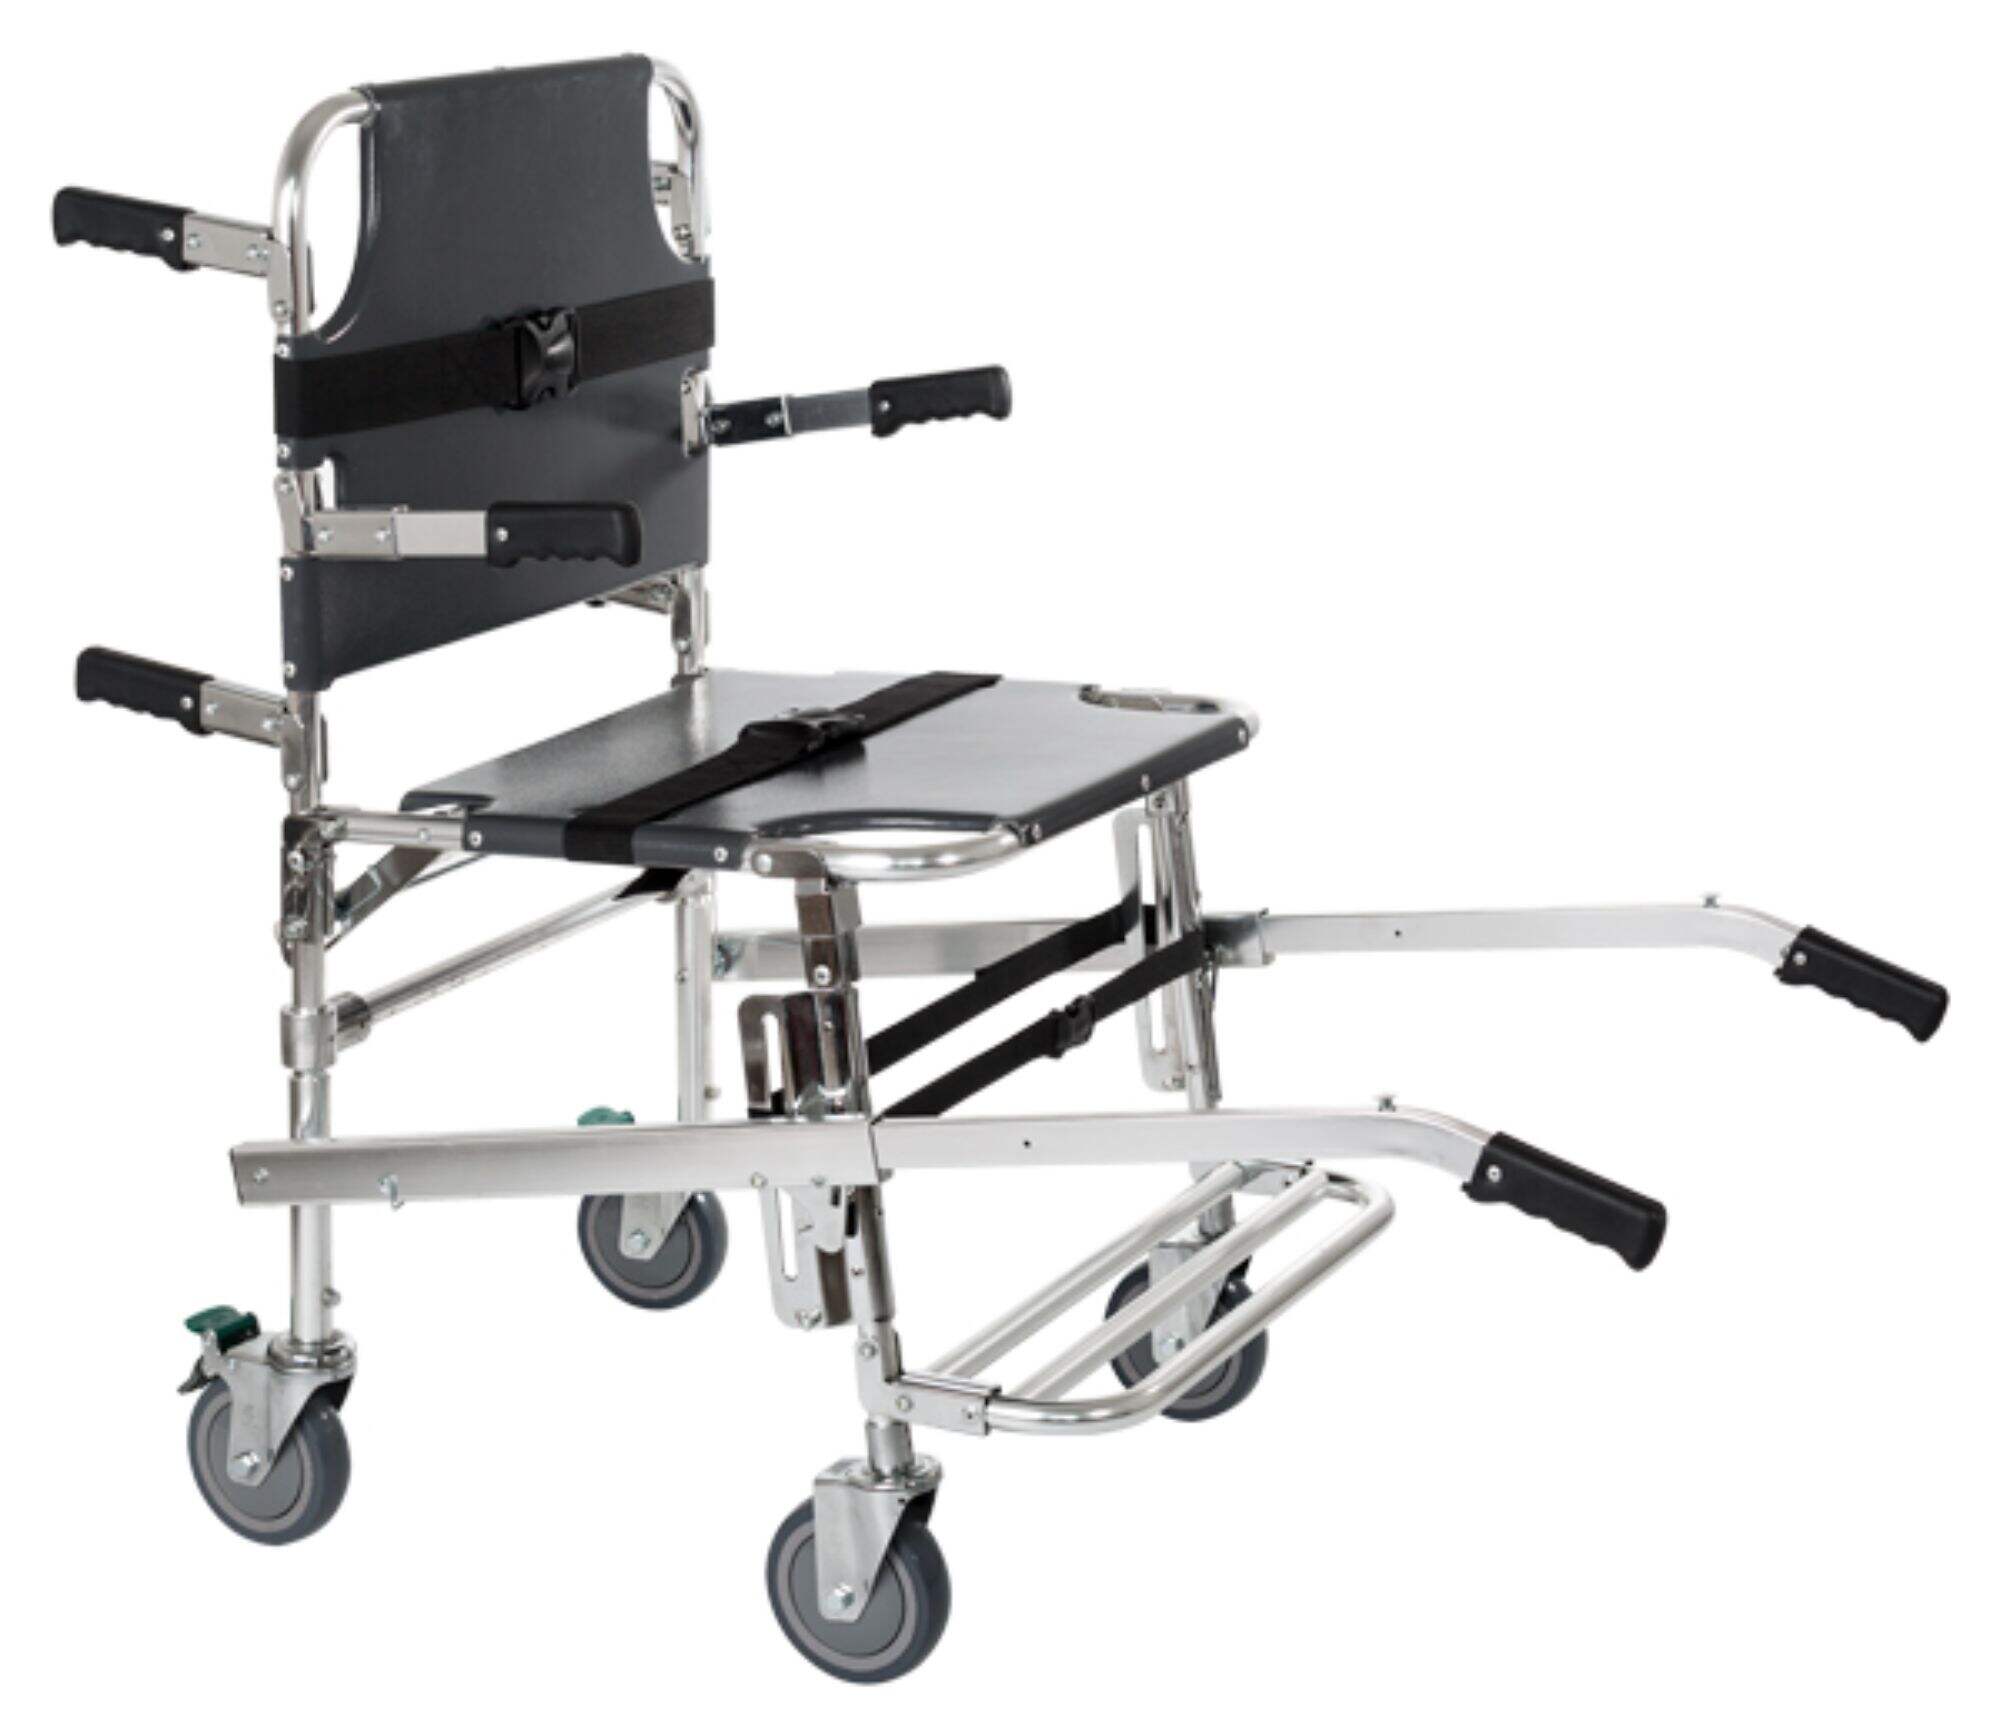 YXH-5C Professional Emergency Professional Four Wheels Chair